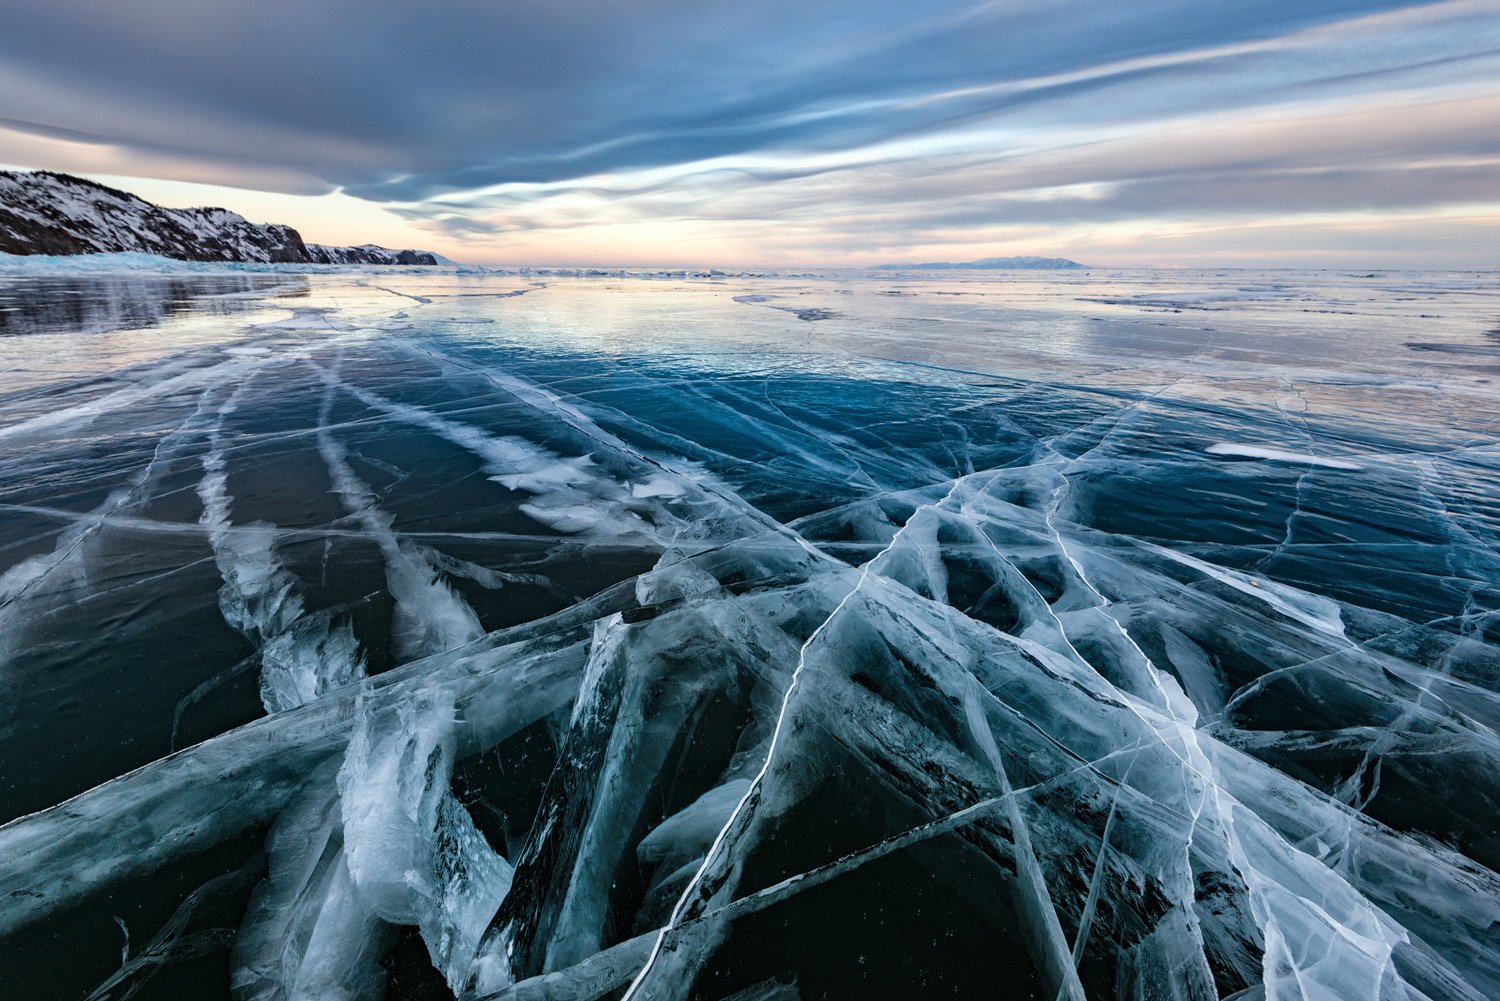 Uzury, Olkhon island, Lake Baikal, Russia. Image: Sergey Pesterev/www.tpoty.com